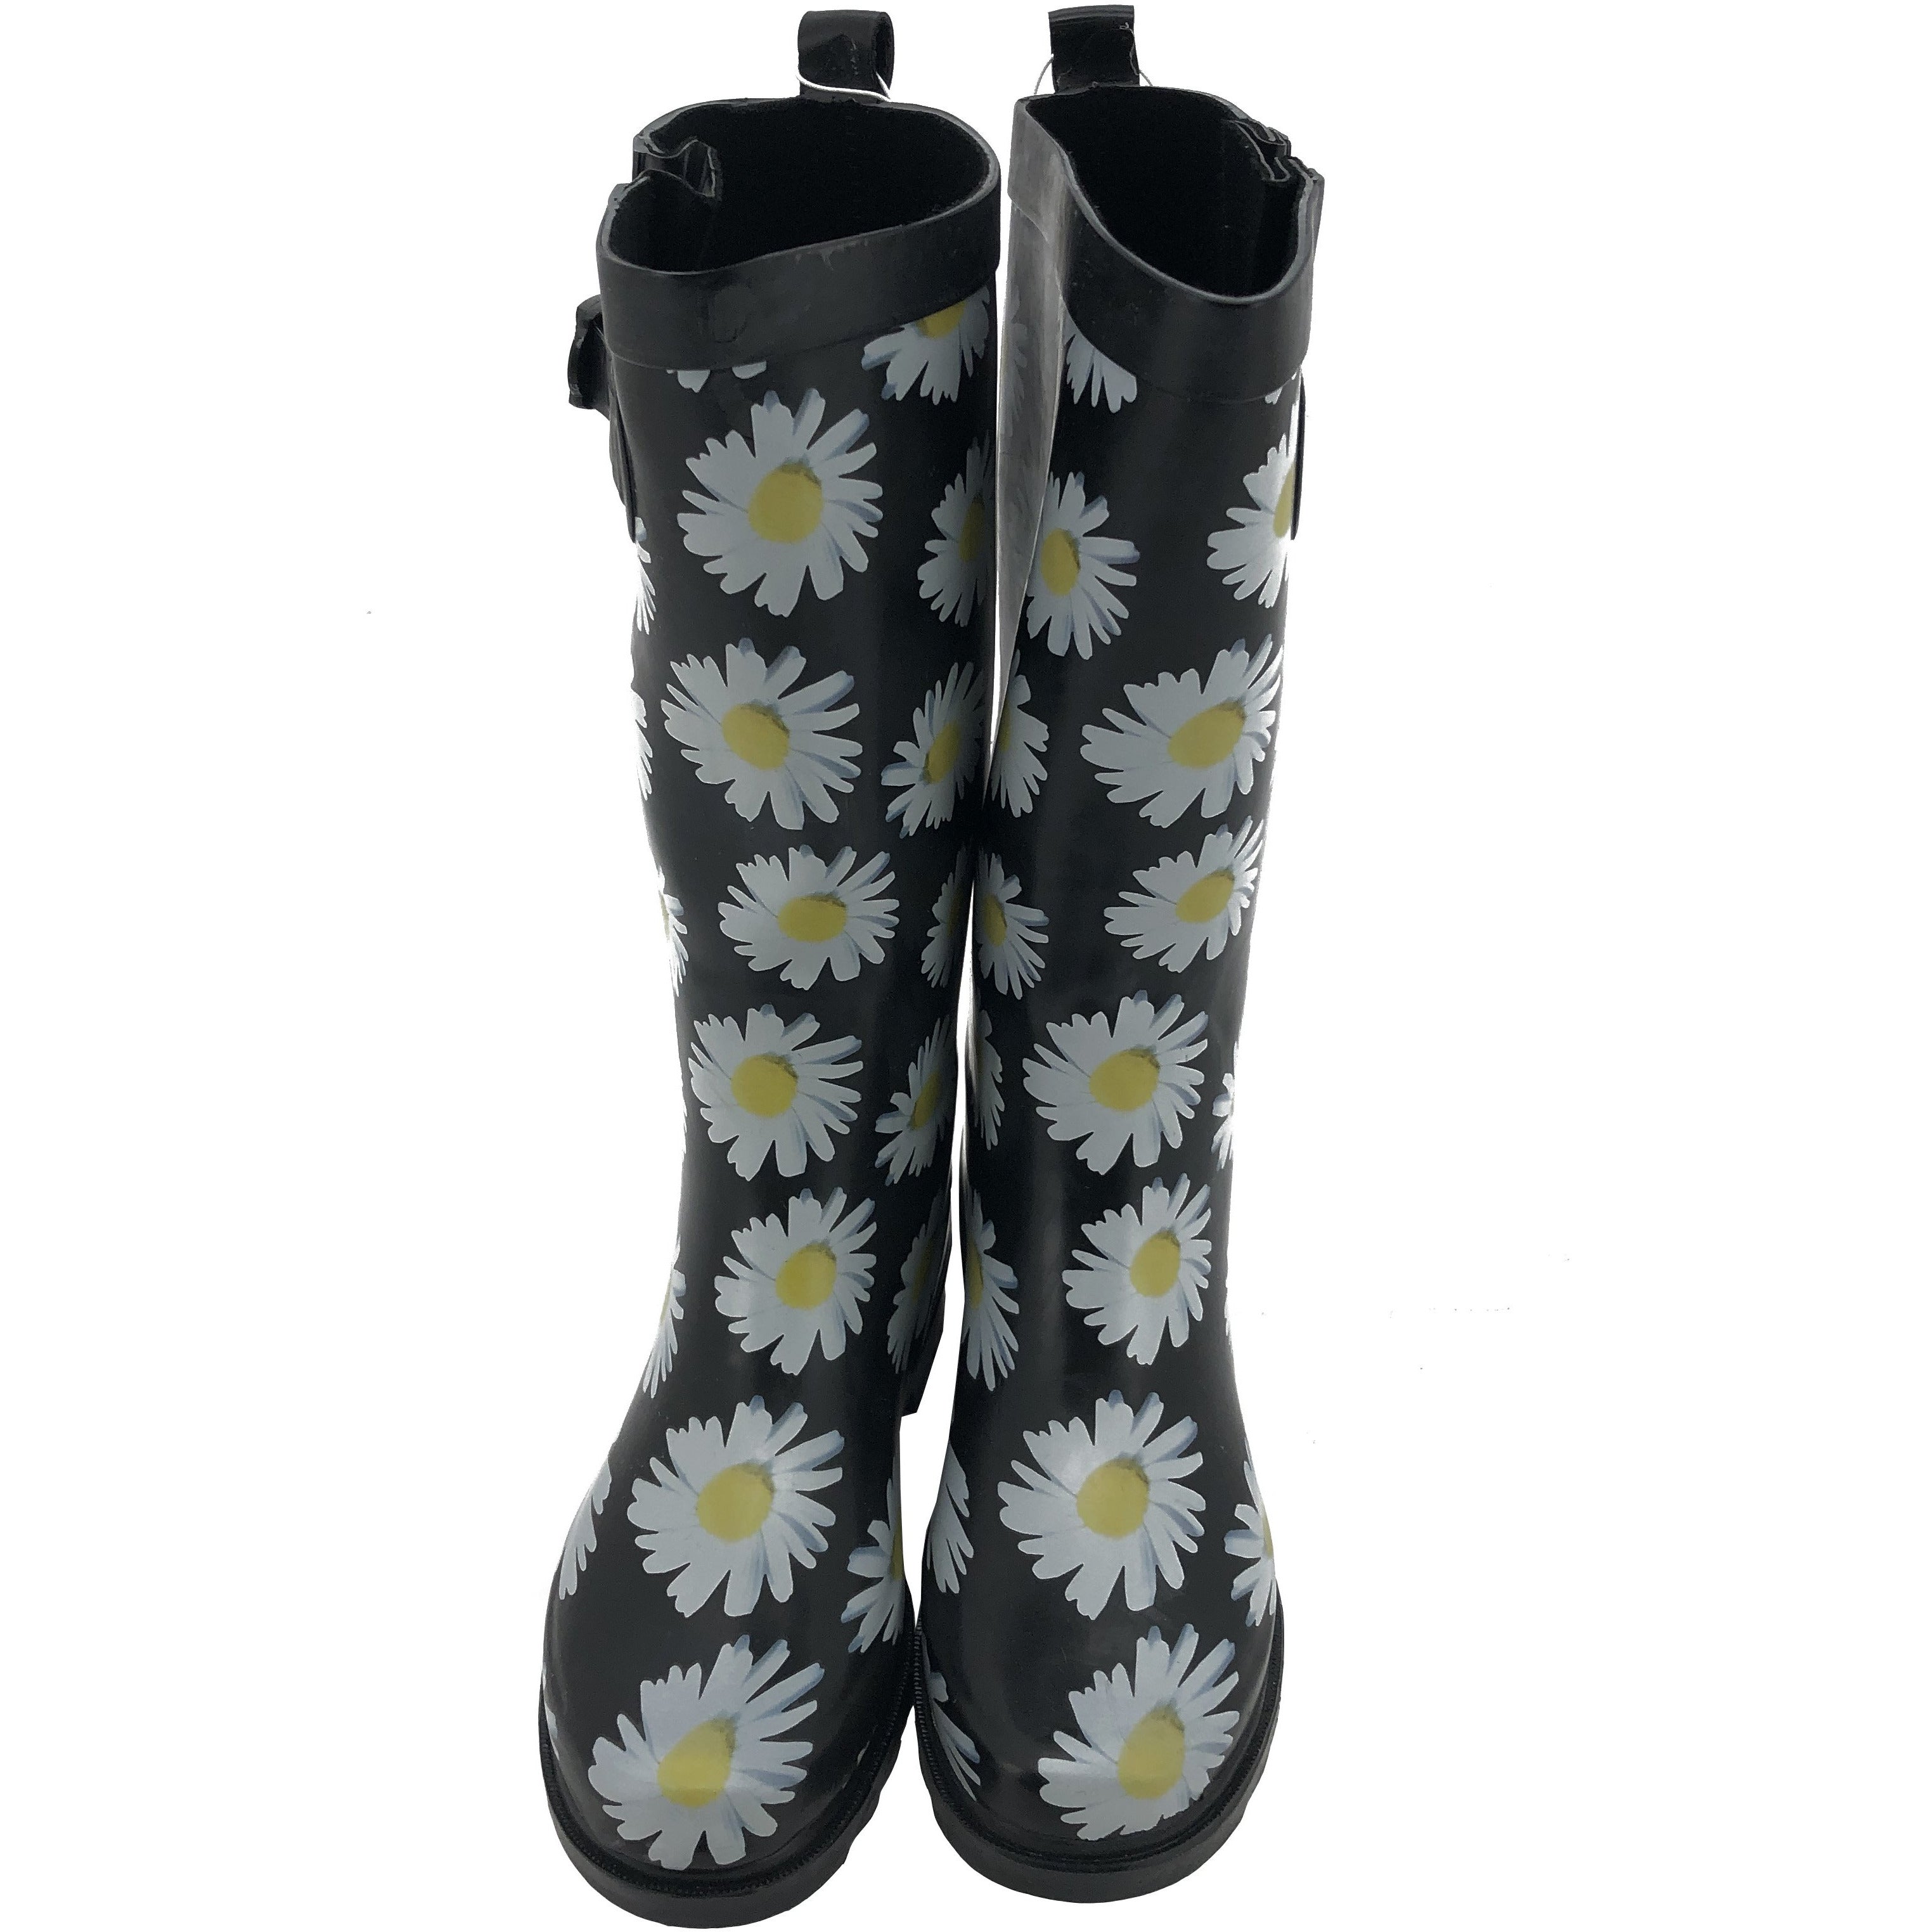 Flower print rubber boots